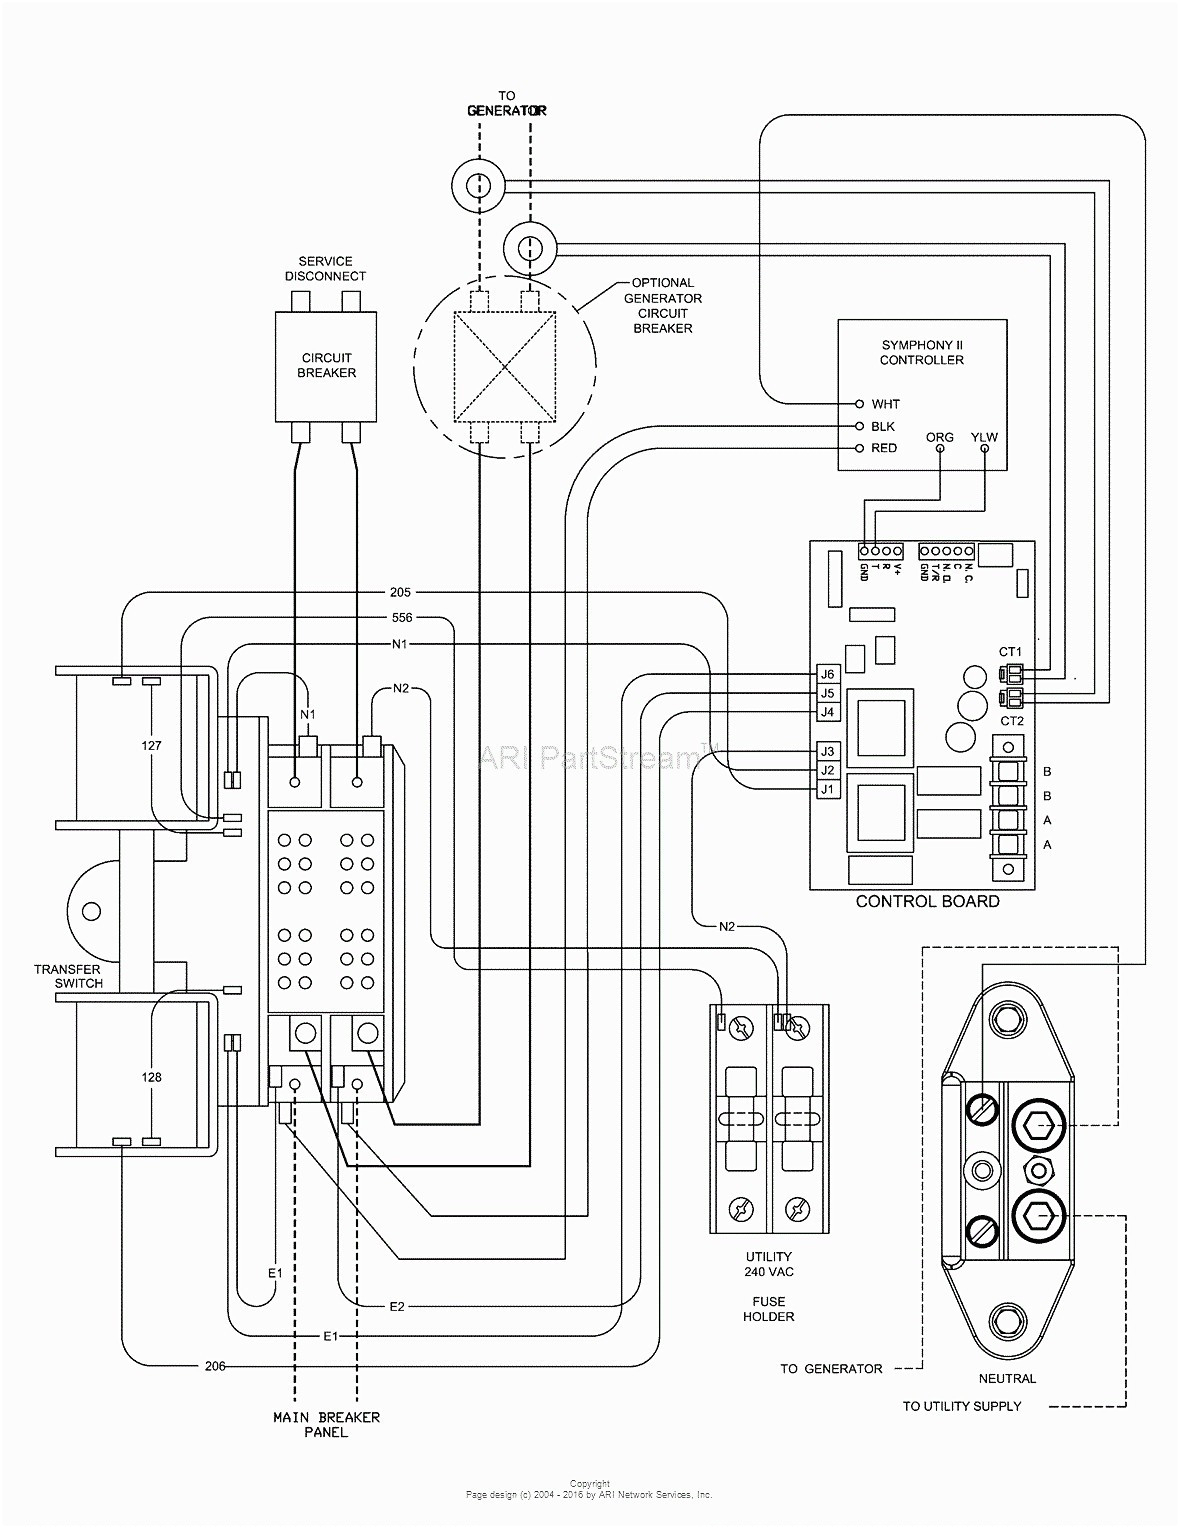 generac automatic transfer switch wiring diagram new generac 200 amp generac 6333 wiring diagram